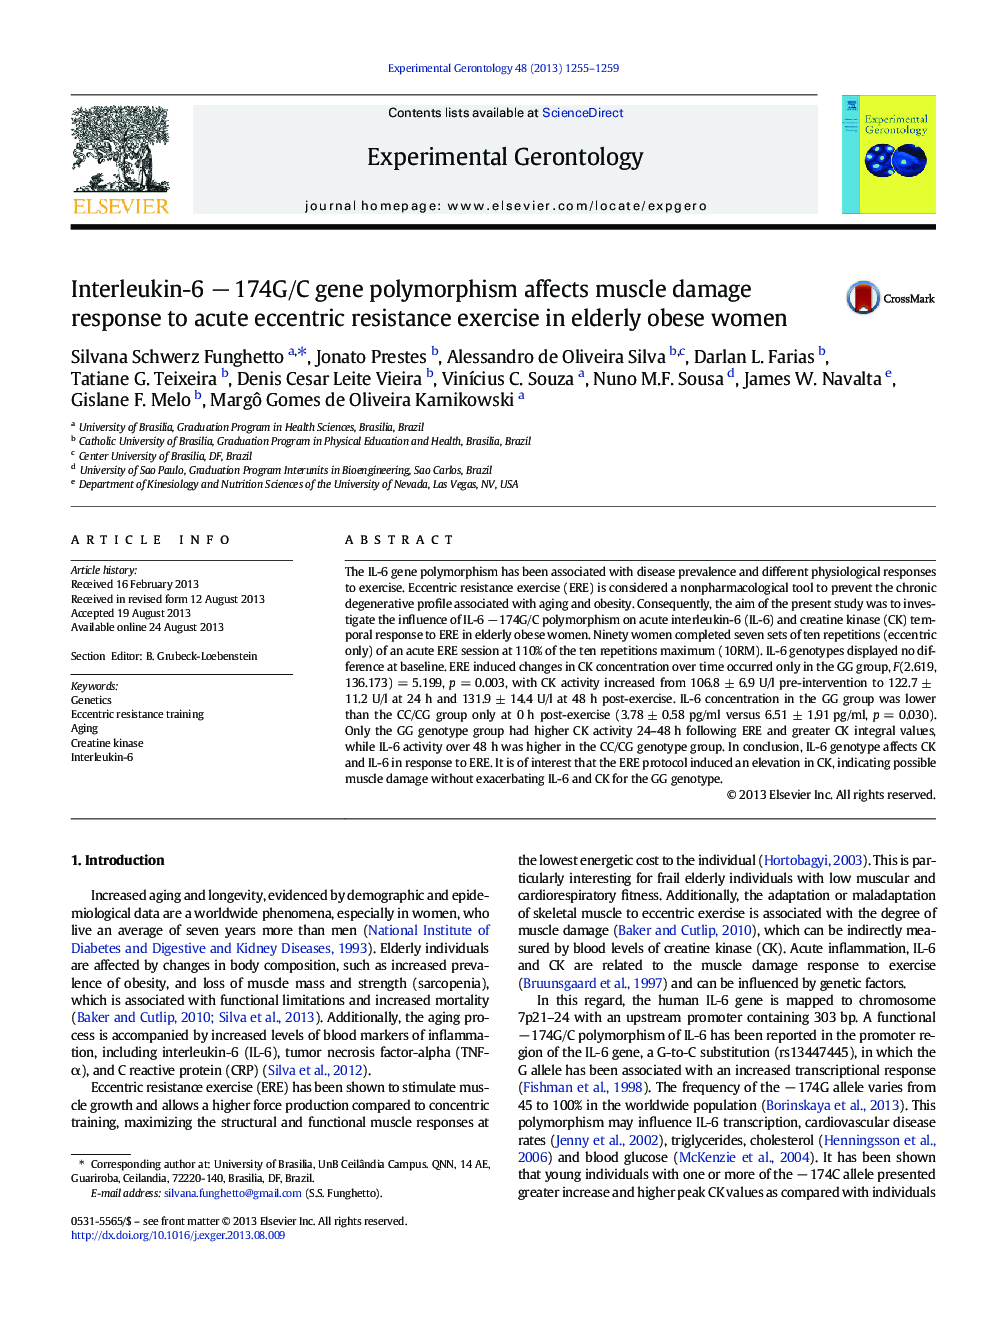 Interleukin-6 âÂ 174G/C gene polymorphism affects muscle damage response to acute eccentric resistance exercise in elderly obese women